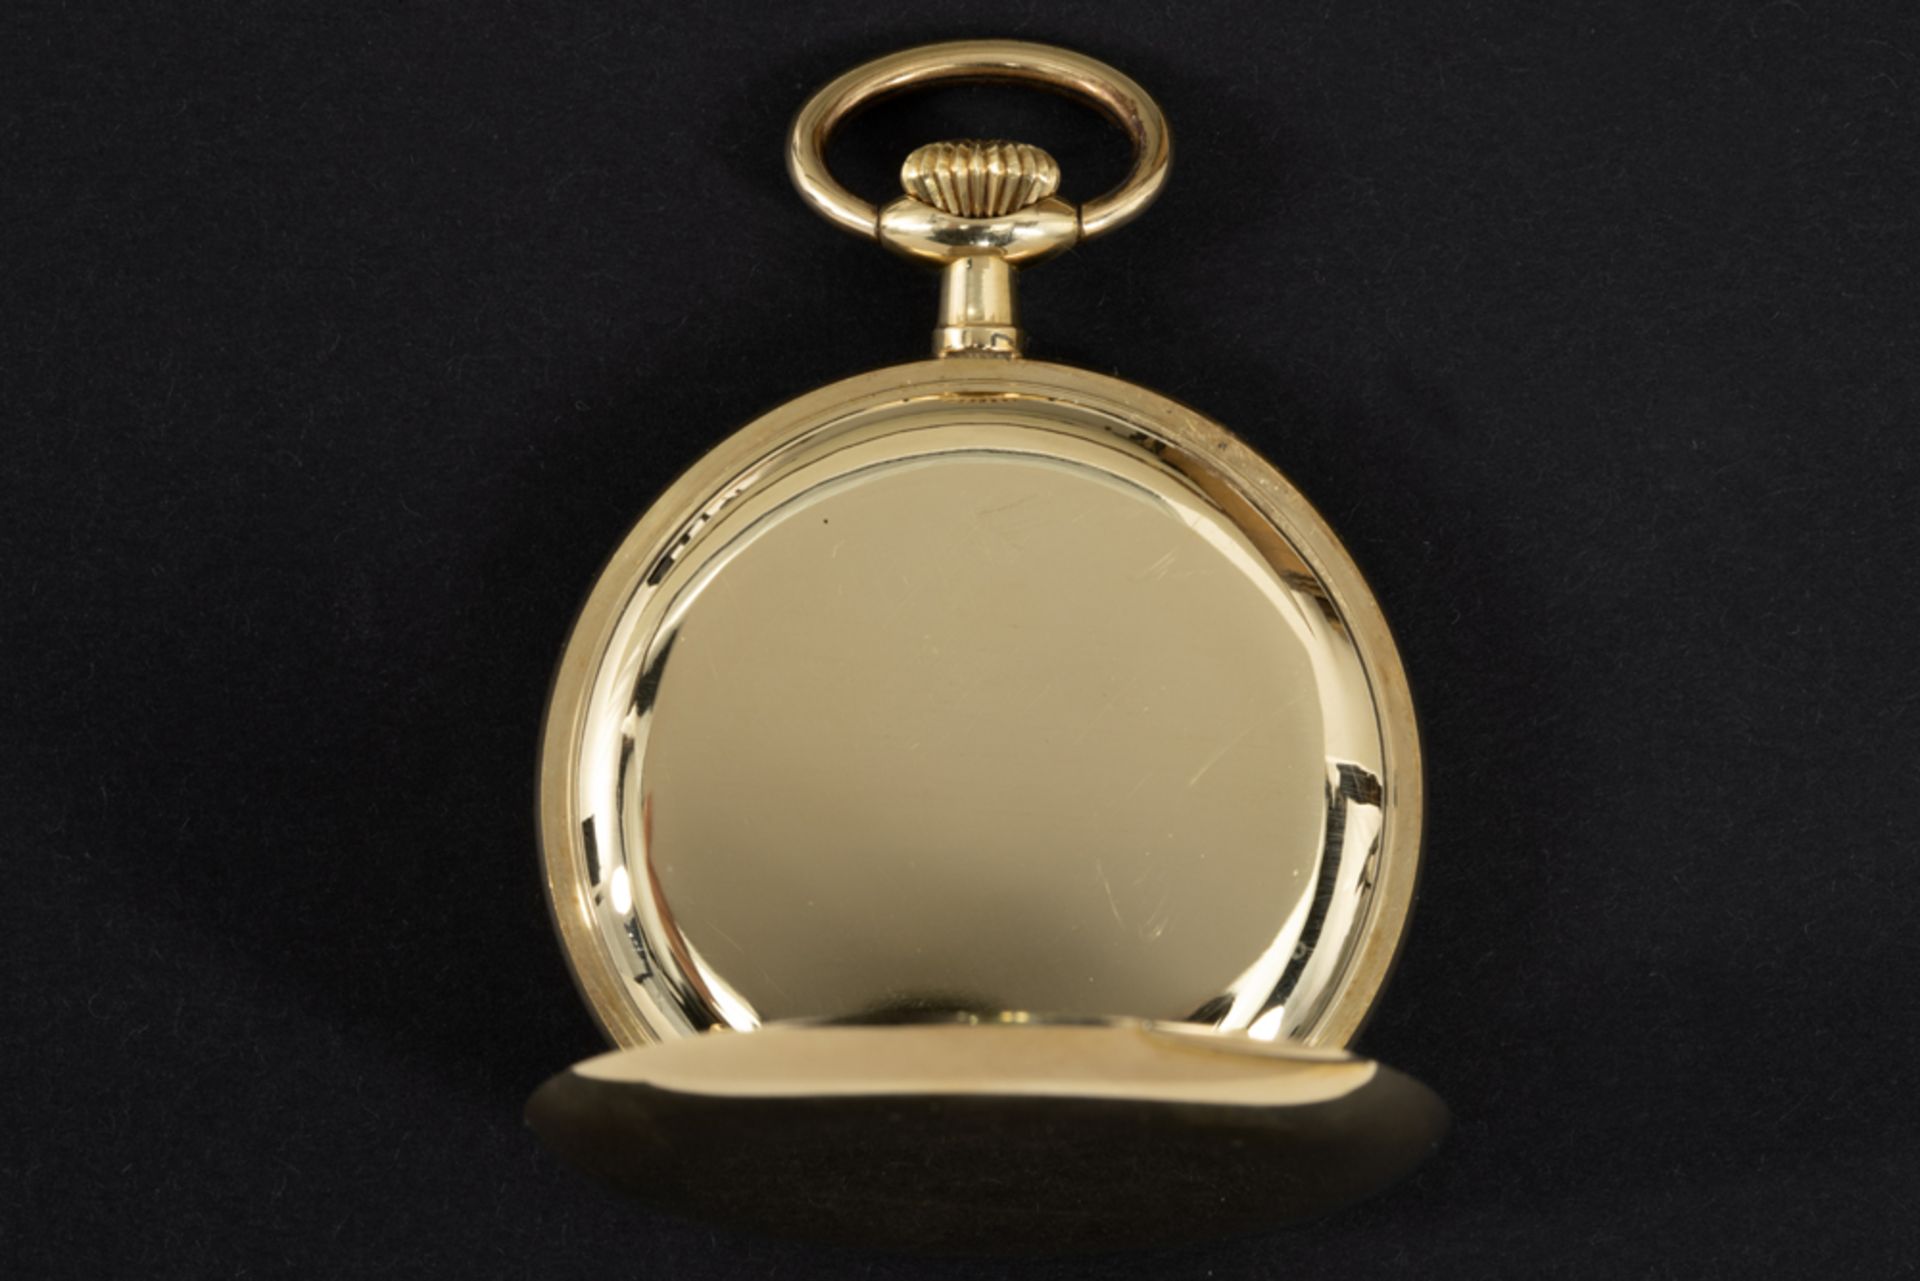 Chronomètre Croissant marked Art Deco pocket watch with its case in yellow gold (18 carat) || - Bild 3 aus 4